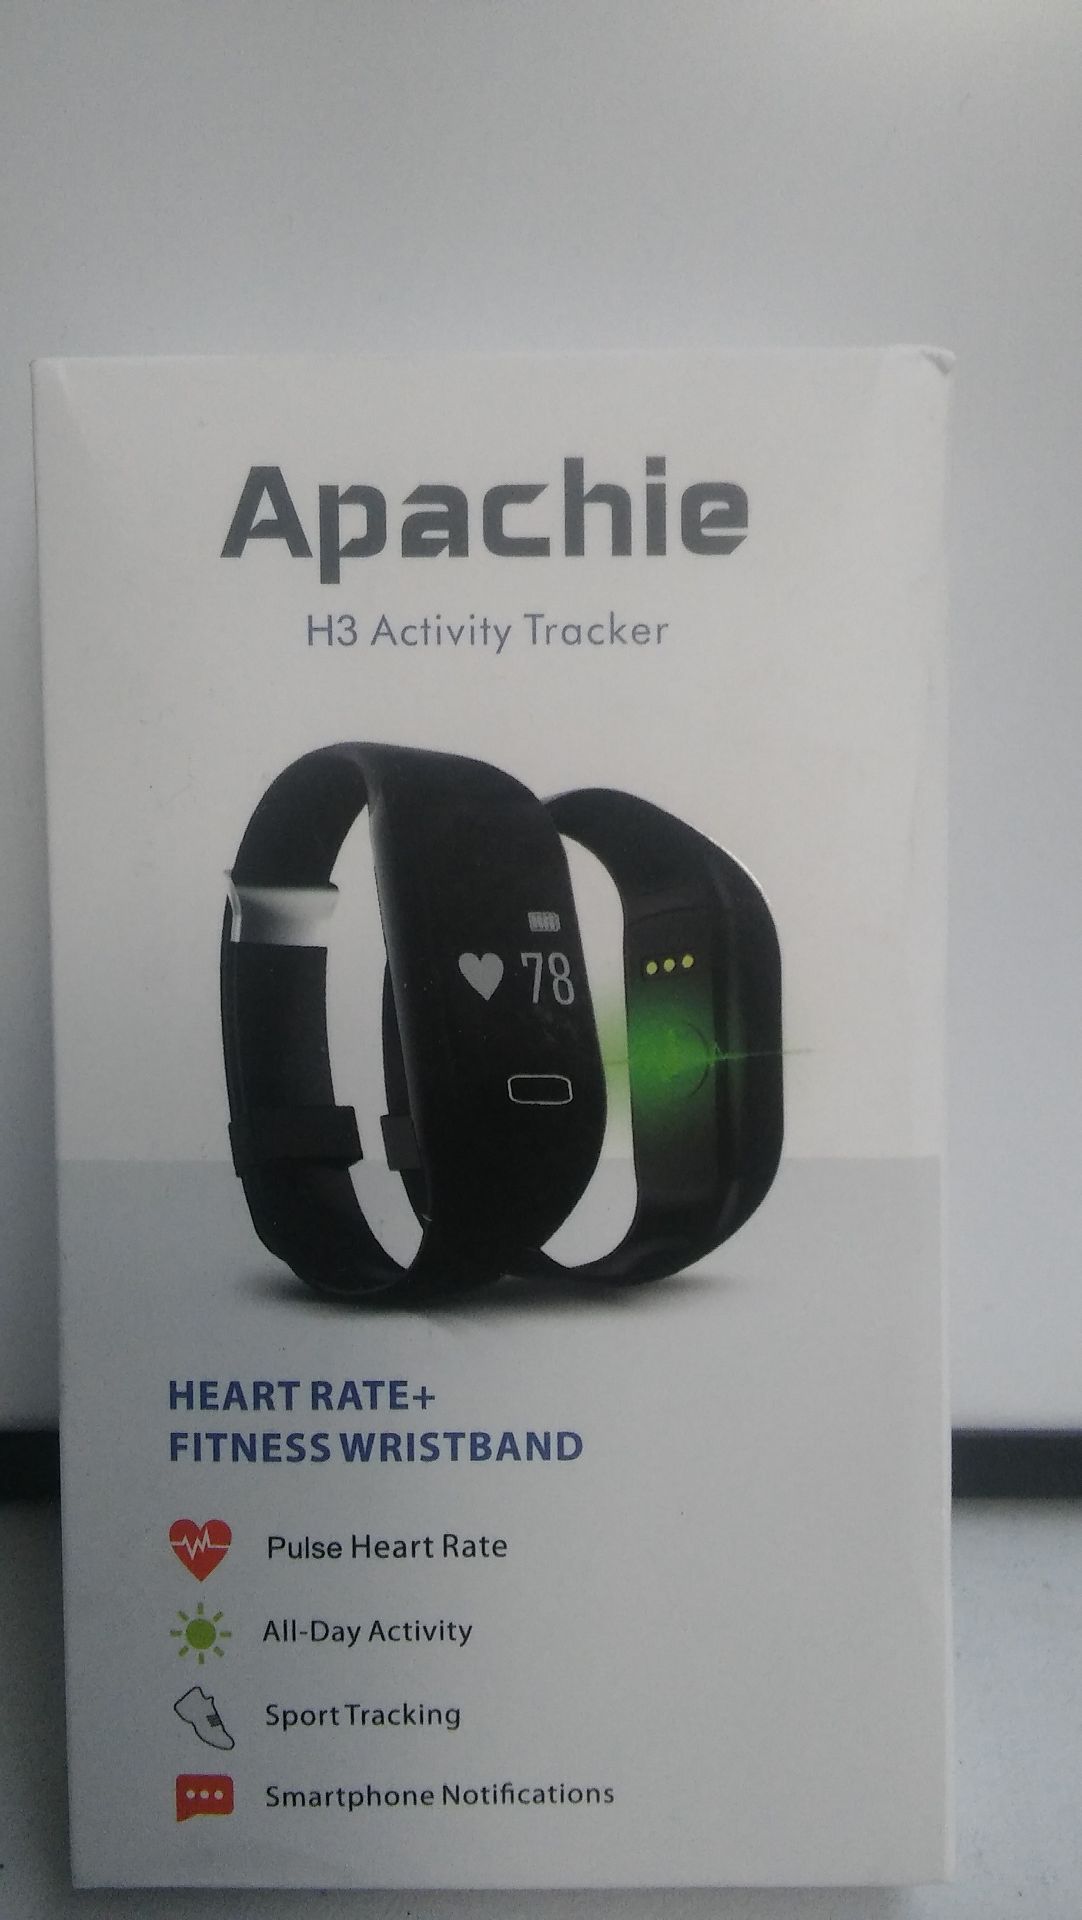 "Apachie" H3 activity tracker. PurpleNew.